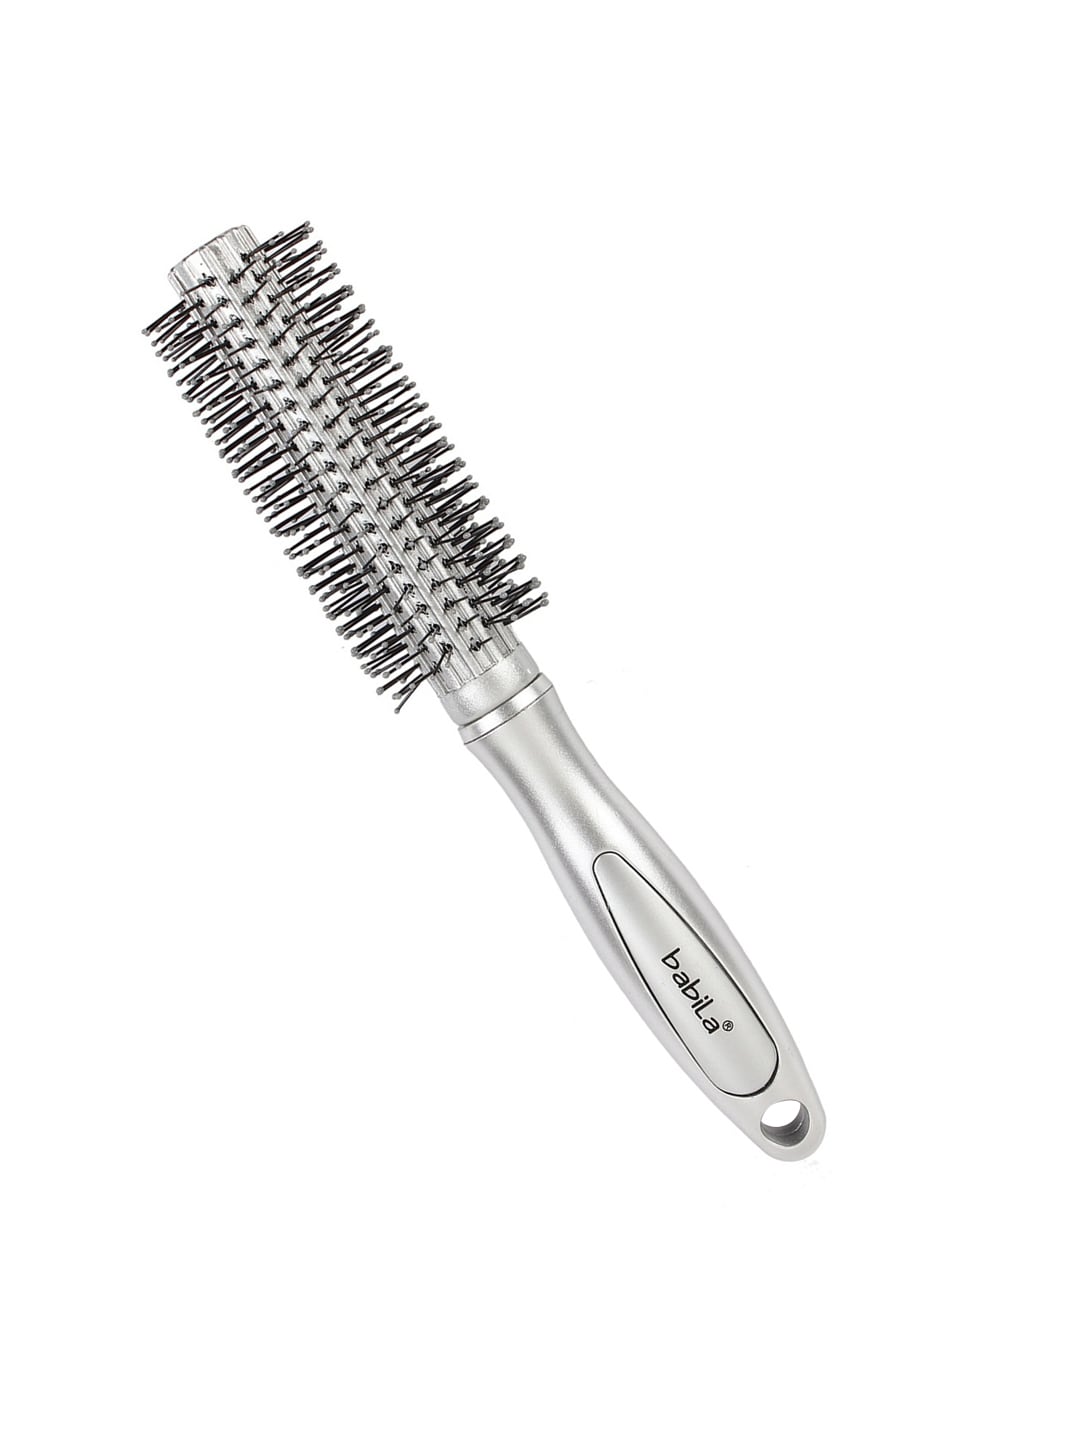 babila Unisex Silver-Toned Round Hair Brush HB-V620 Price in India